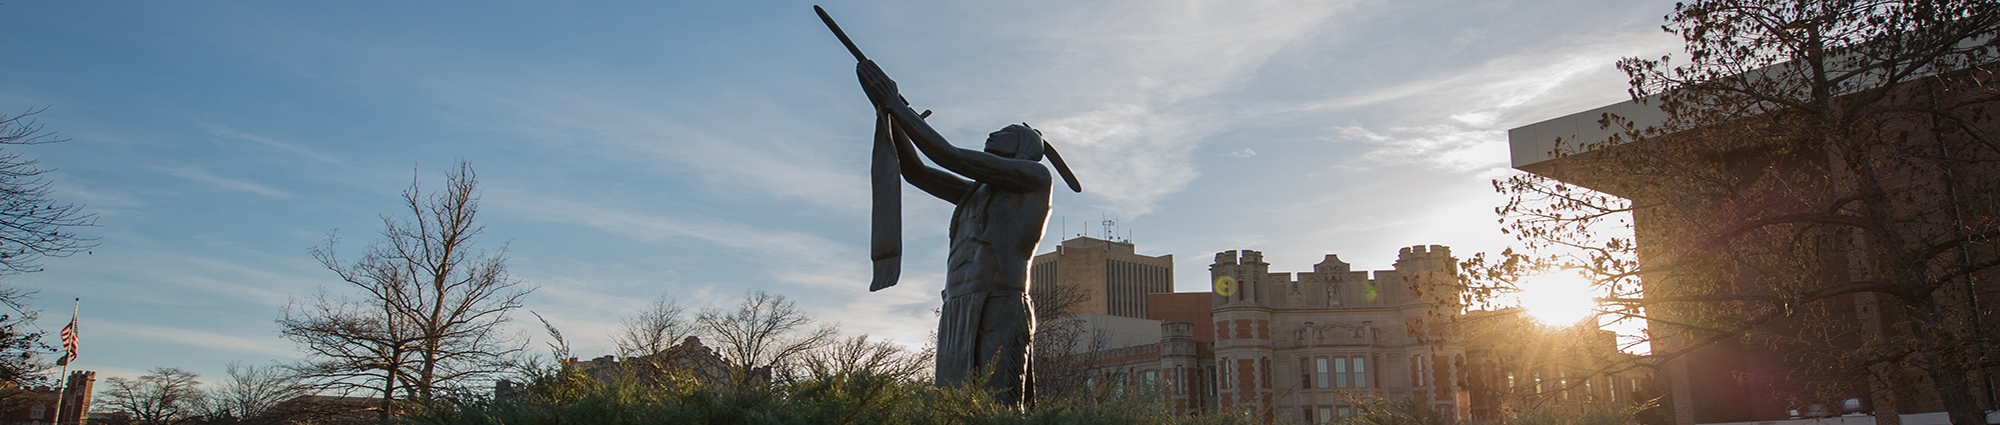 OU campus statue of Native American indian.